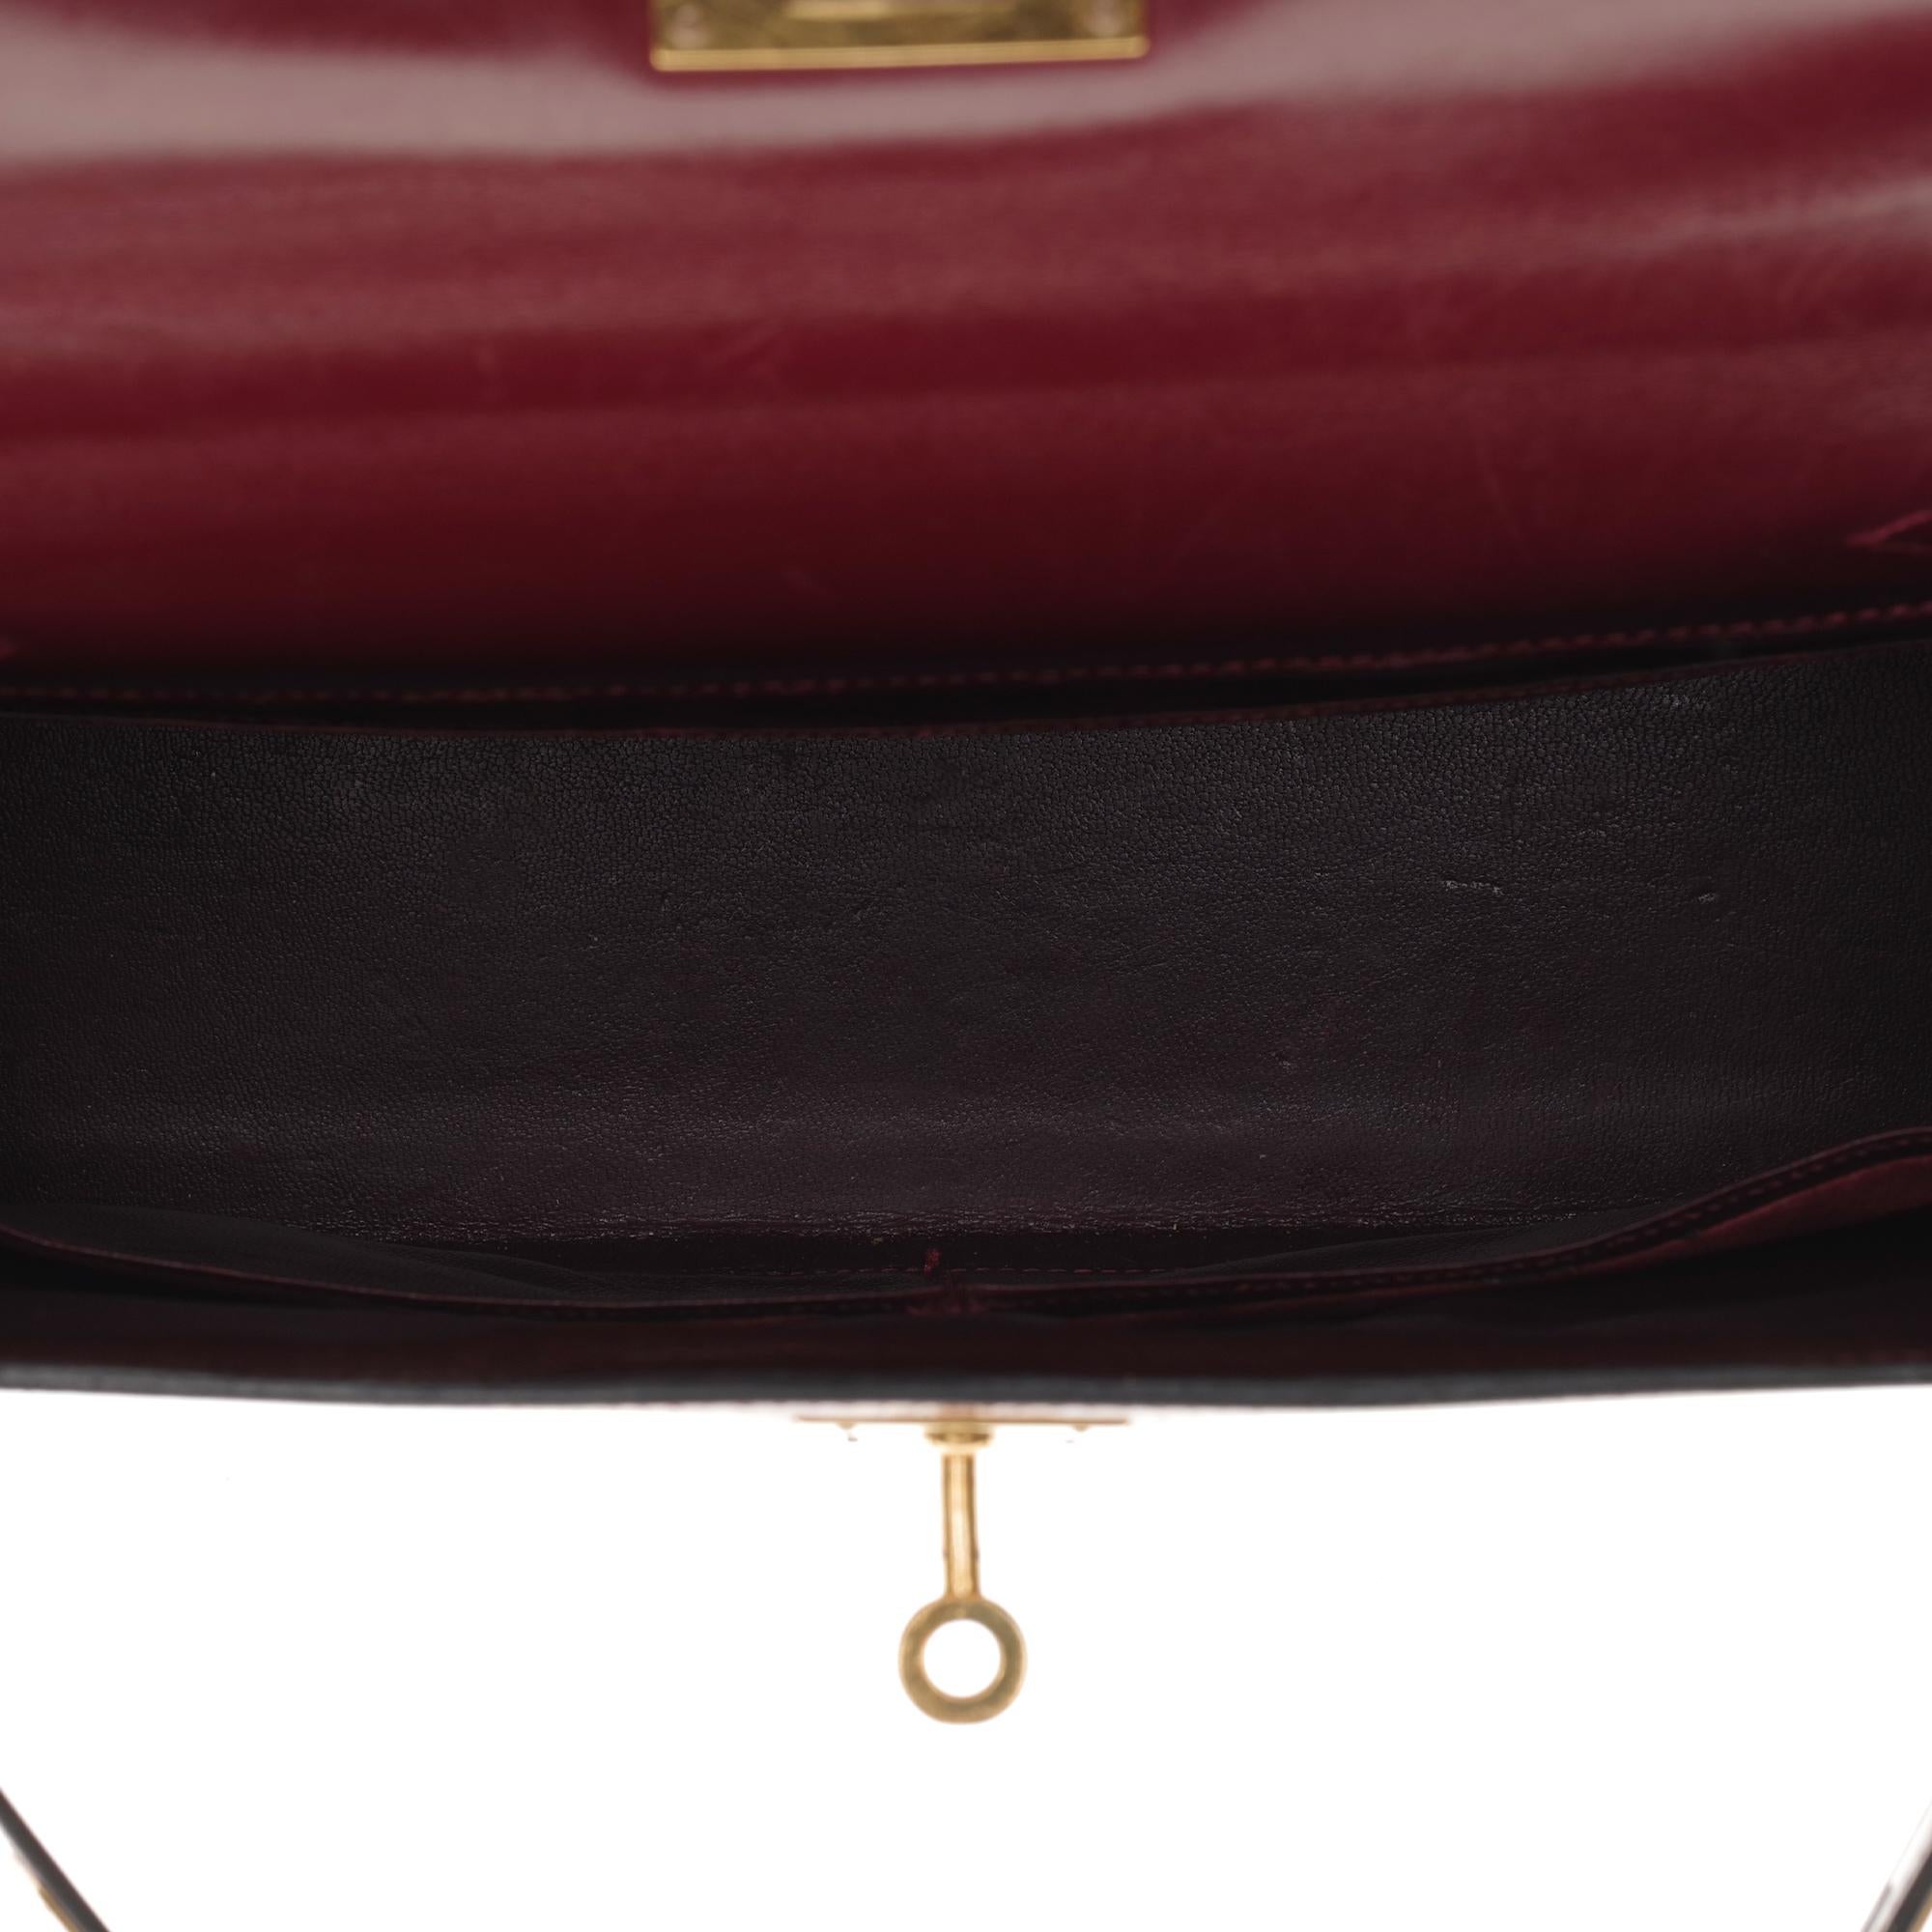 Women's Hermès Kelly 28cm sellier with strap handbag in burgundy calfskin, Gold hardware